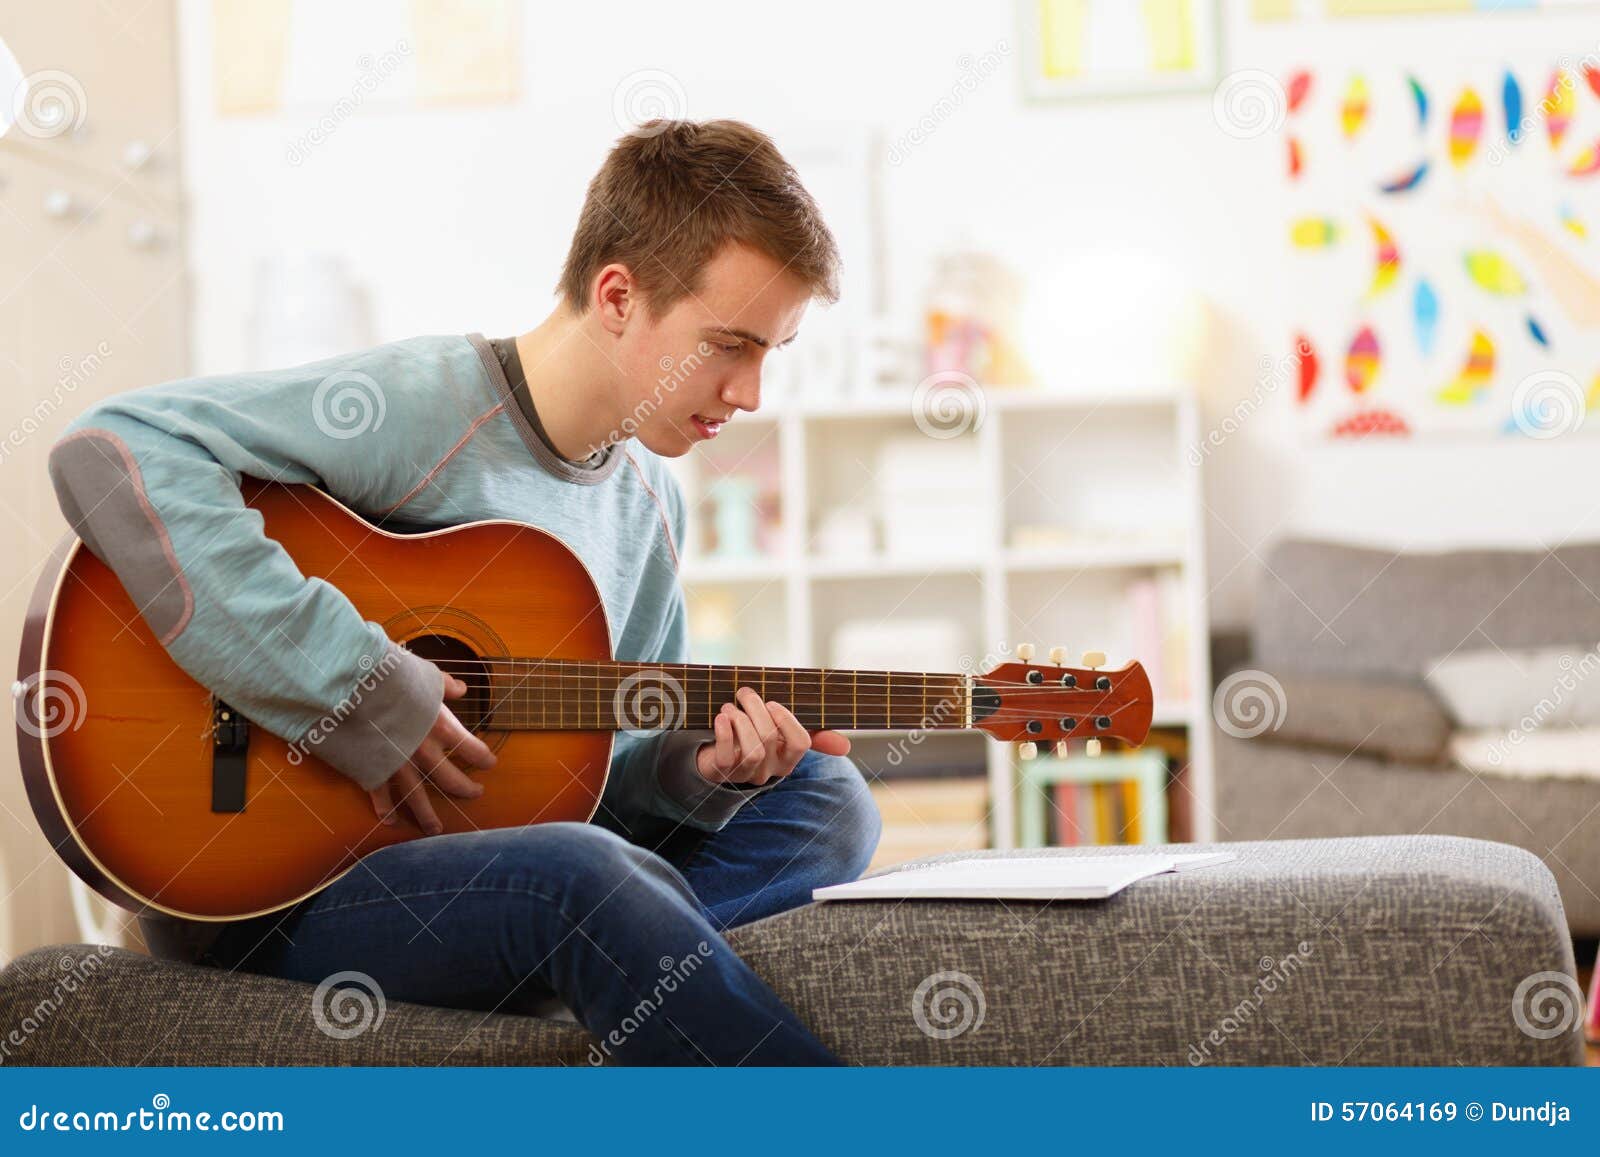 He can play guitar. Человек играющий на гитаре. Мальчик играющий на гитаре. Человек играющий на акустической гитаре. Люди играющие на гитаре.